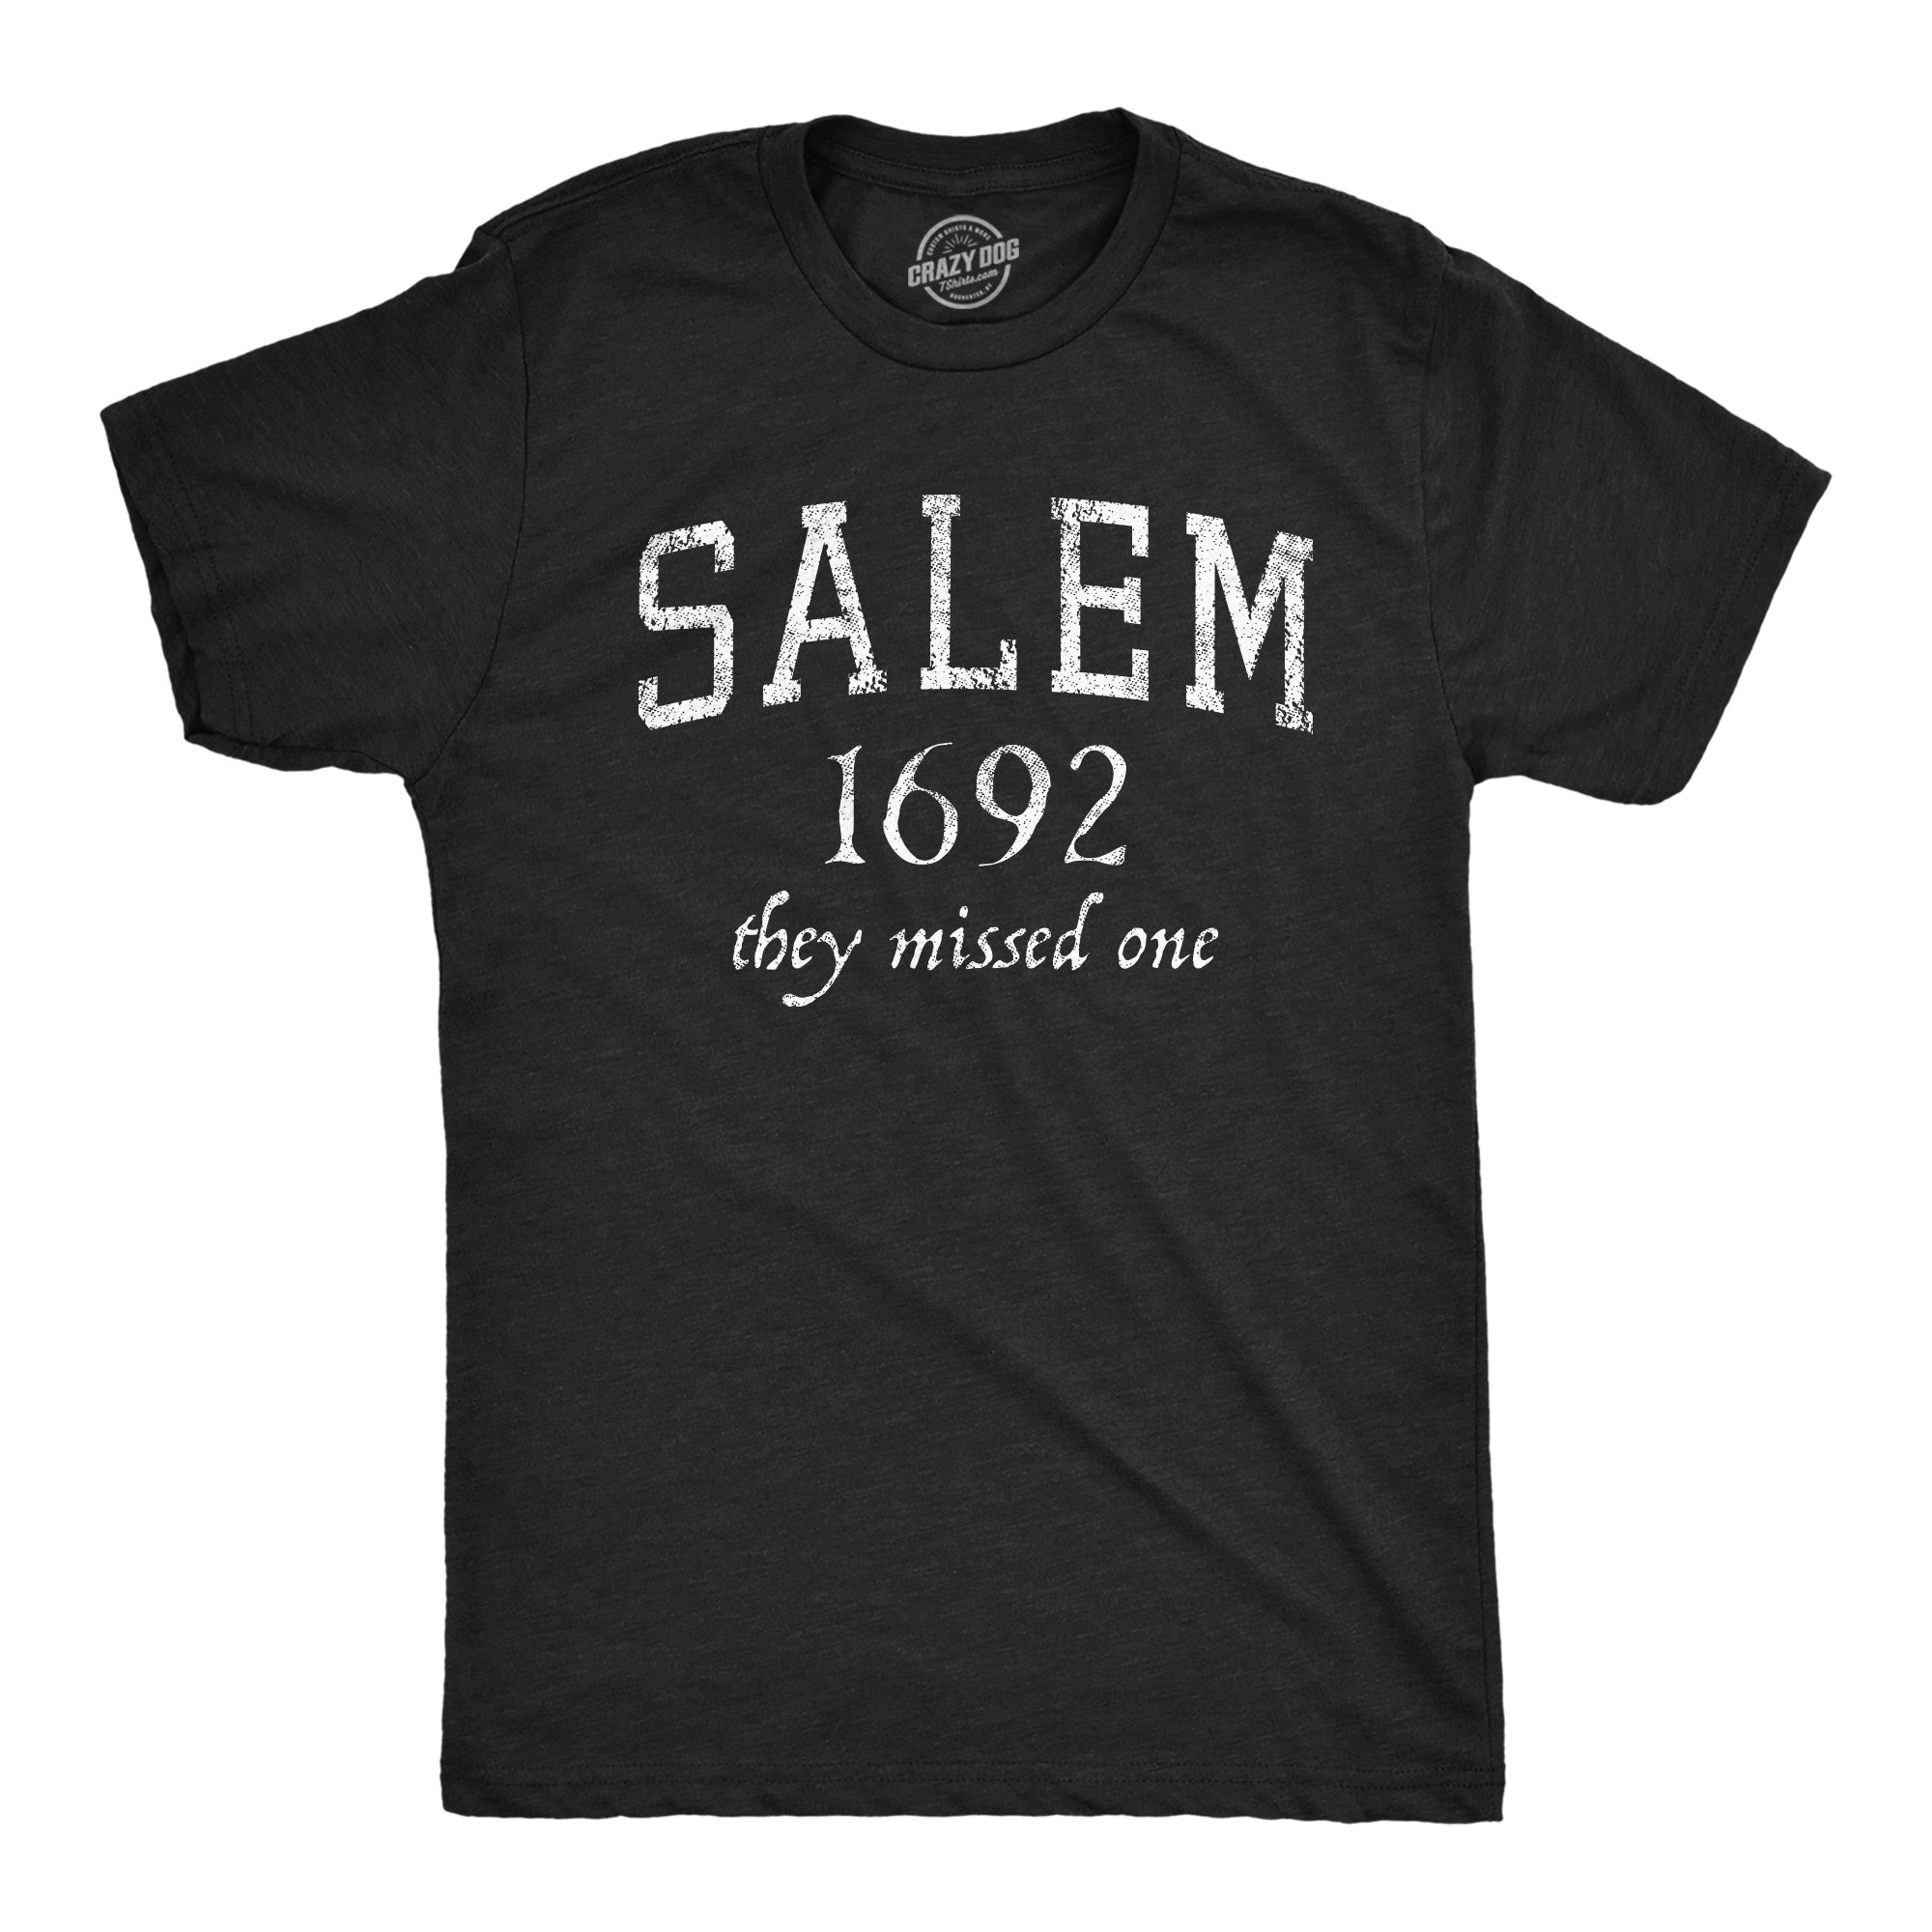 Funny Heather Black - SALEM Salem Mass 1692 Mens T Shirt Nerdy Halloween Sarcastic Tee